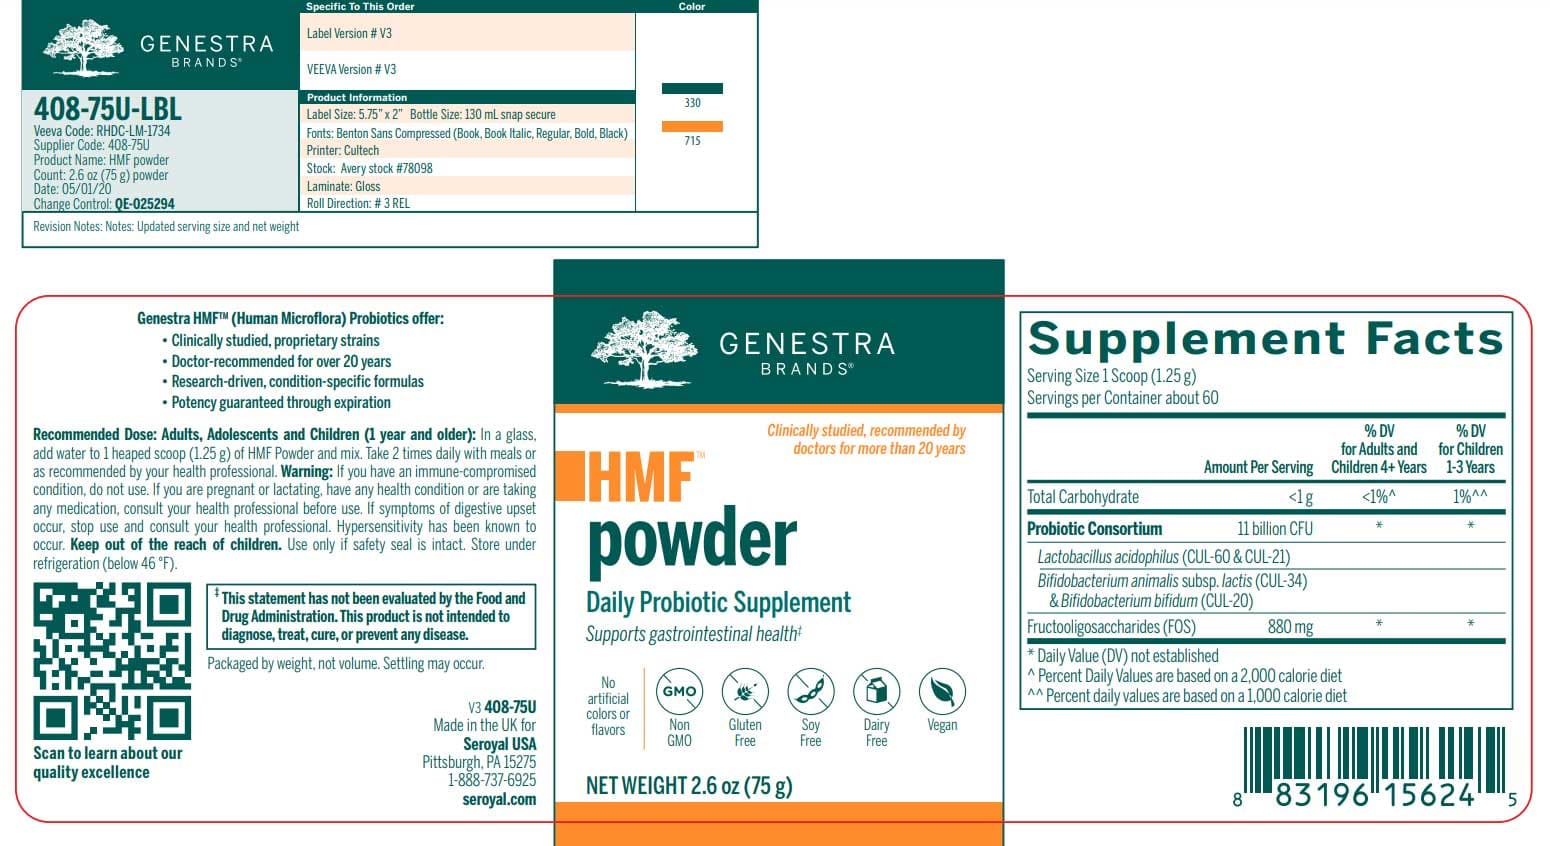 Genestra Brands HMF Powder Label